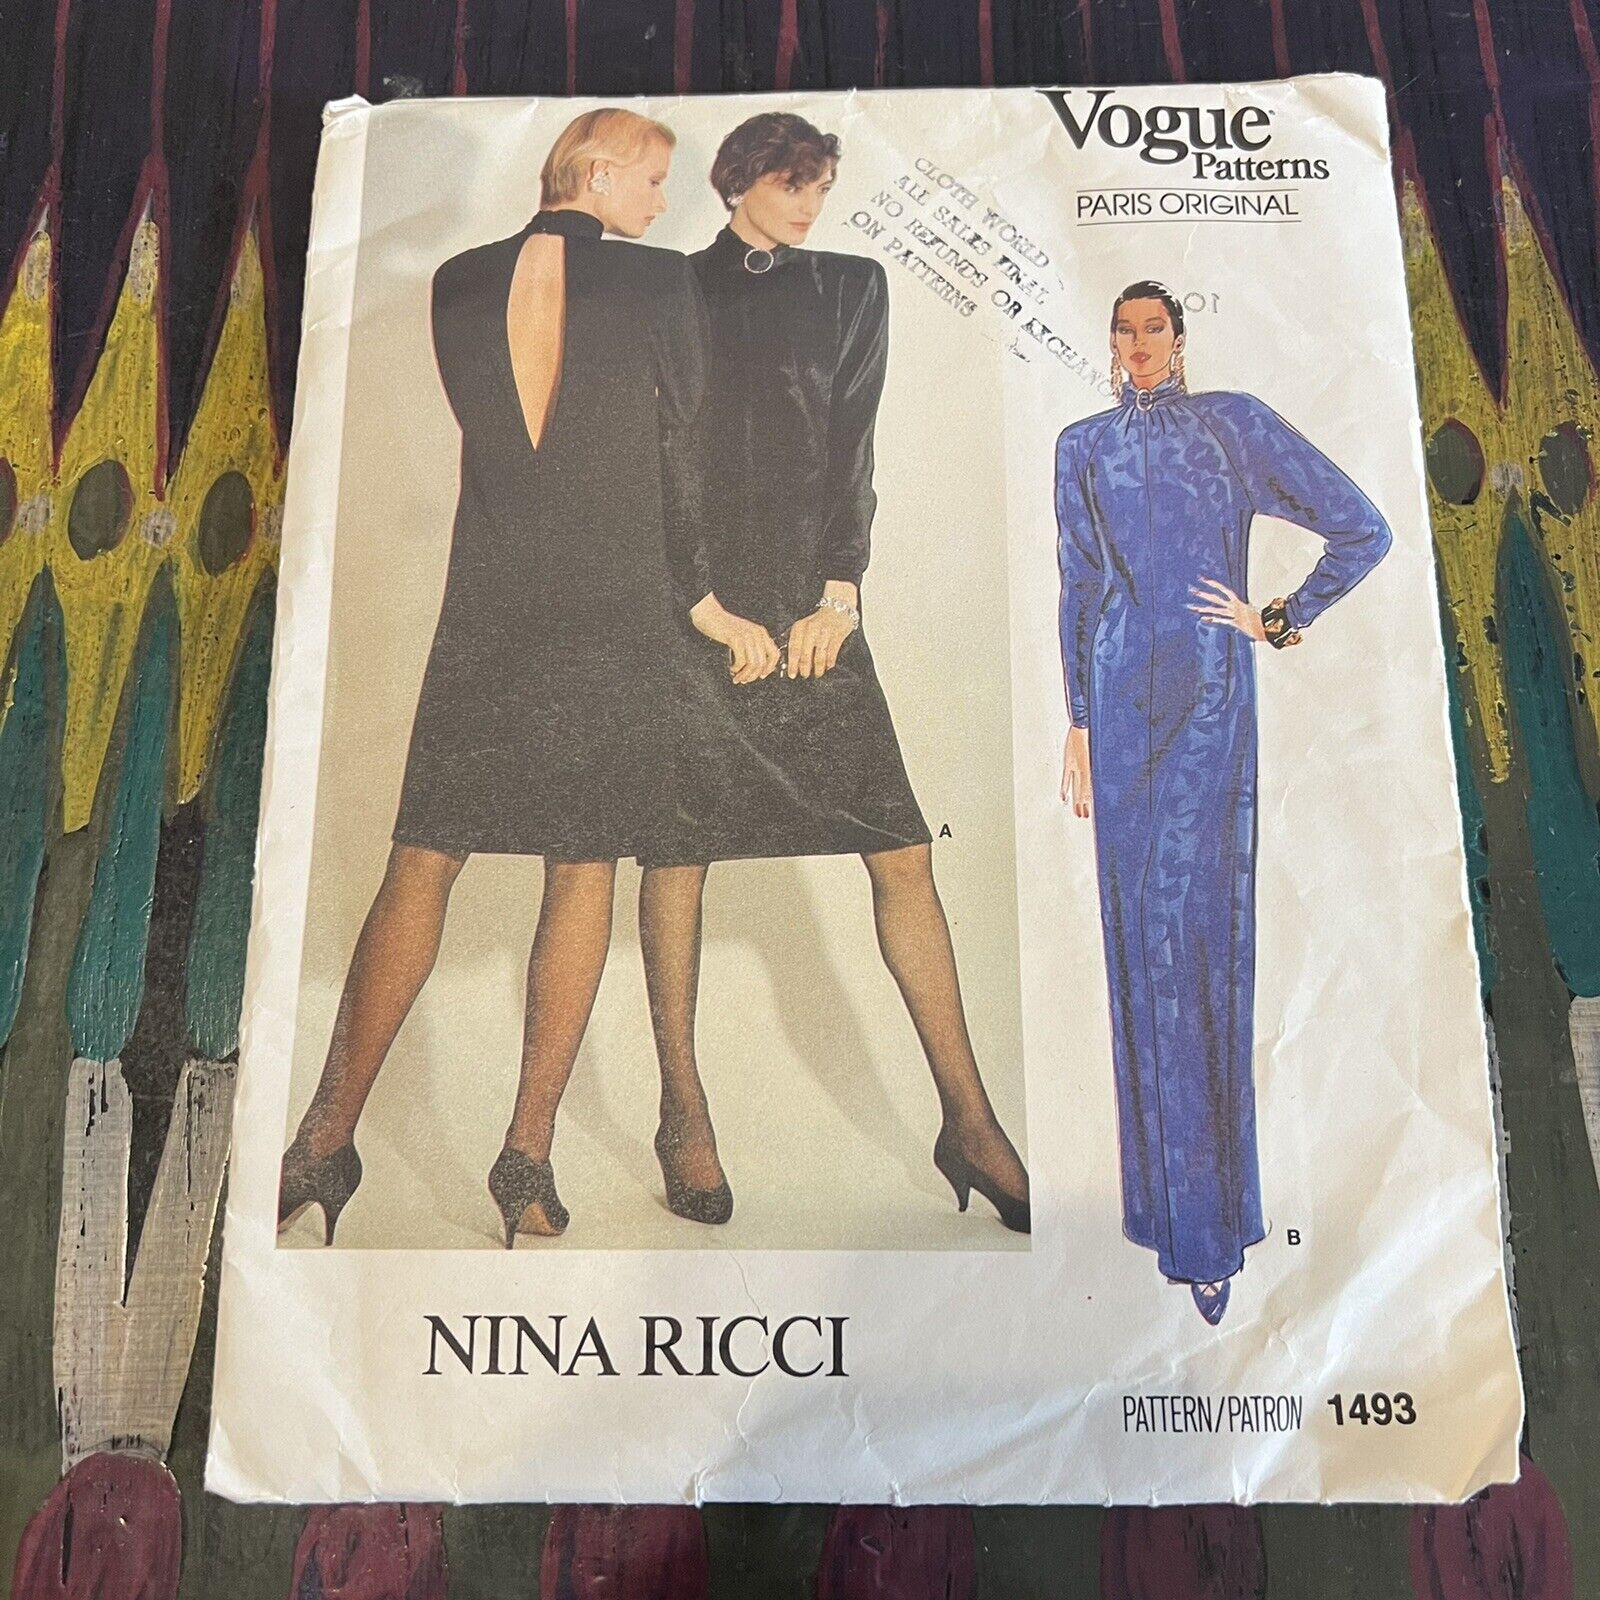 Vintage 80s Vogue Paris 1493 Nina Ricci Loose Fitting Dress Sewing Pattern UNCUT